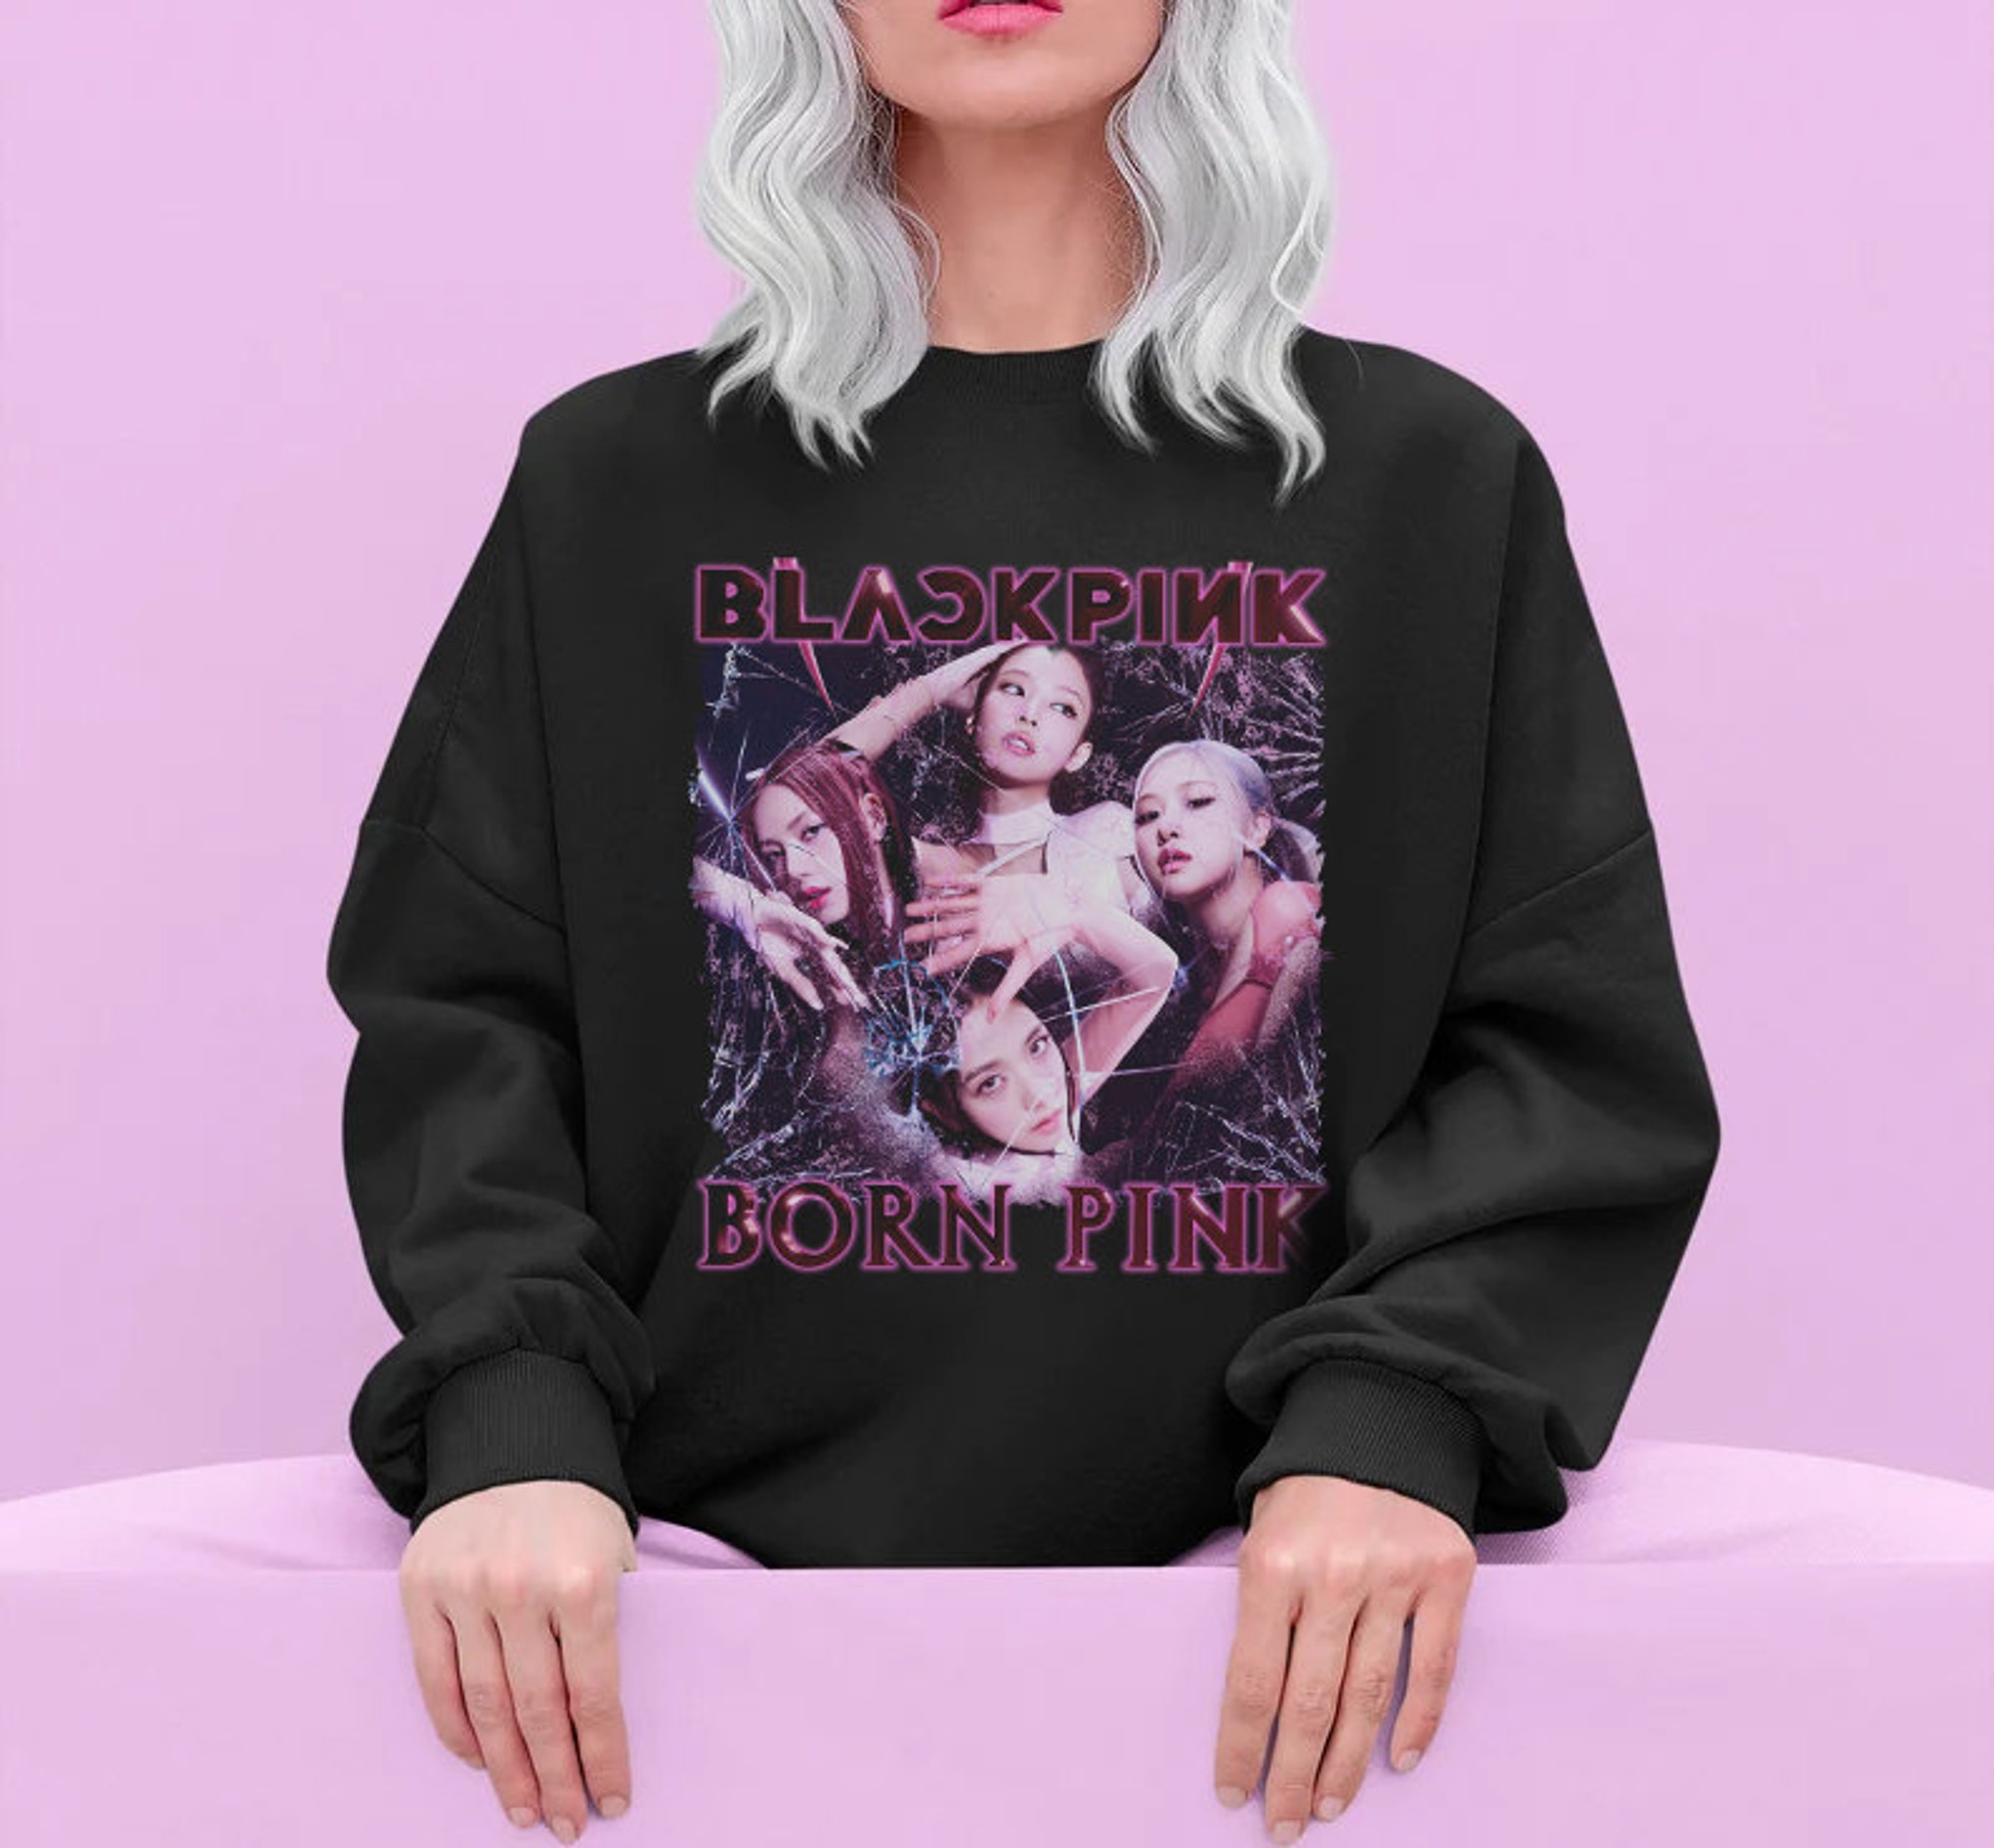 Discover BLACKPINK Shirt, Born Pink World Tour Tshirt